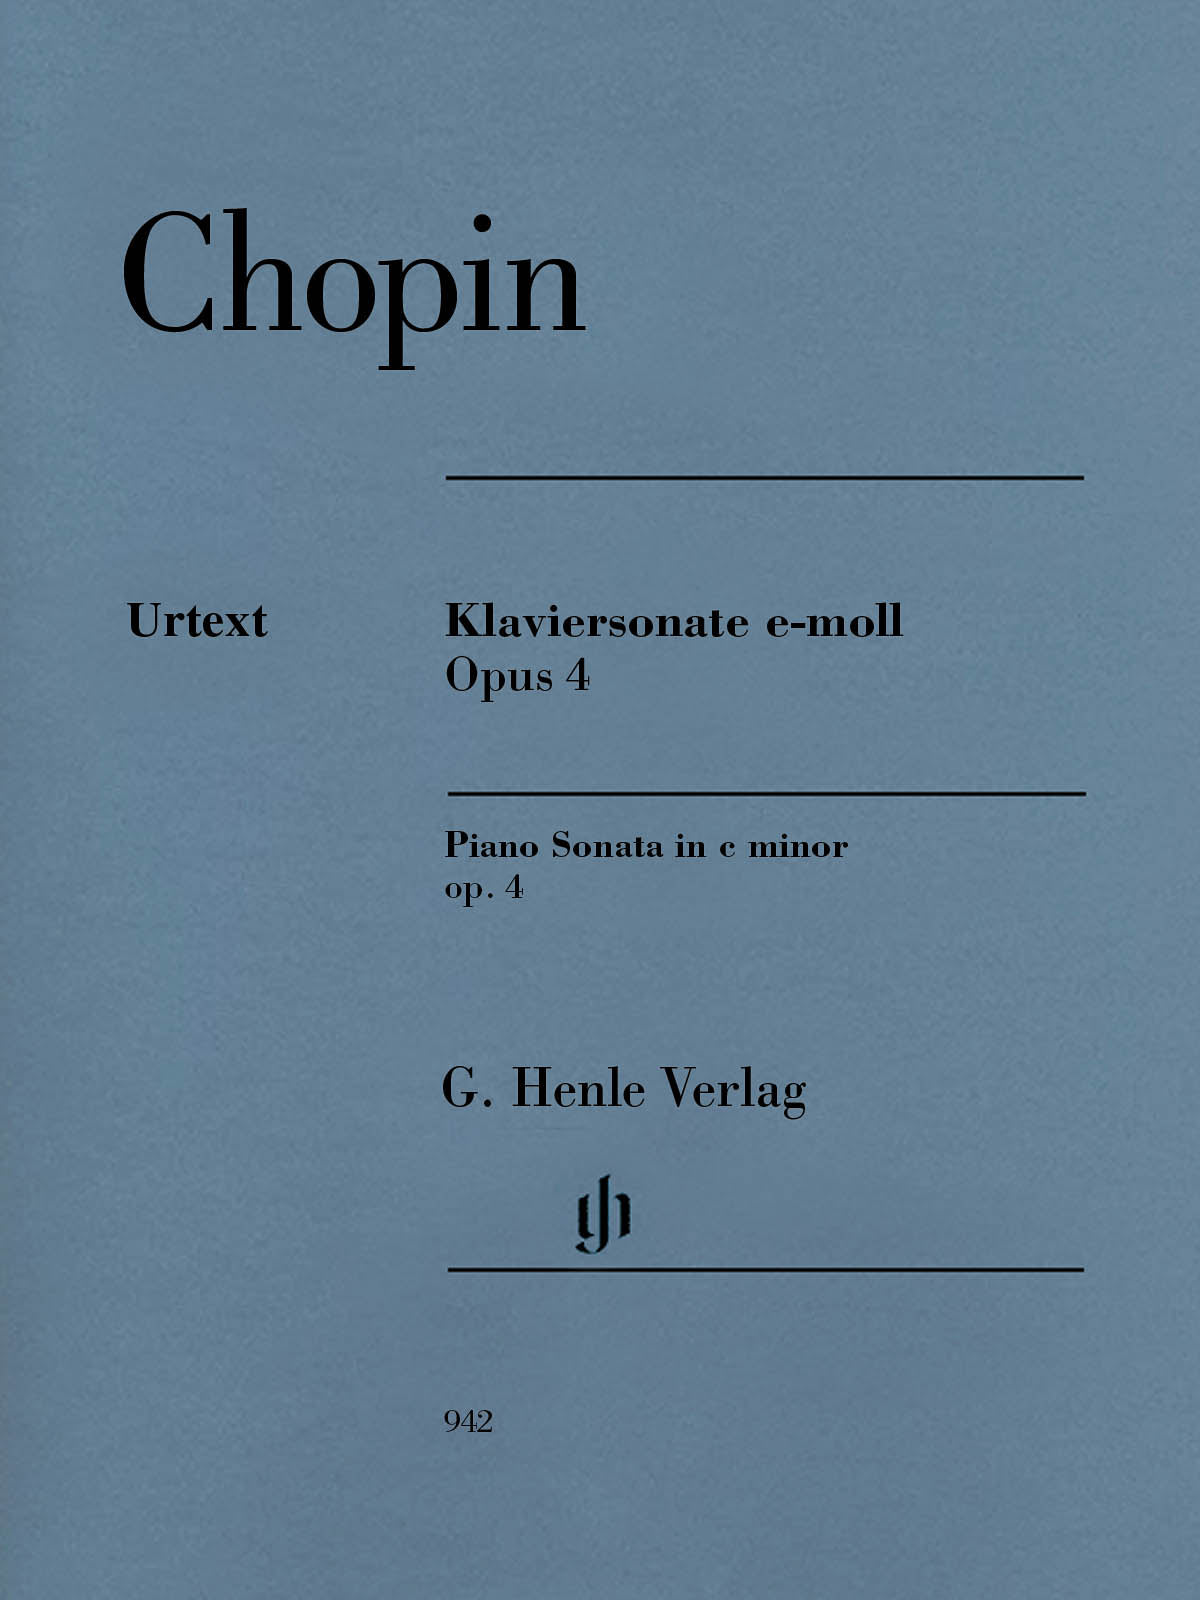 Chopin: Piano Sonata No. 1 in C Minor, Op. 4